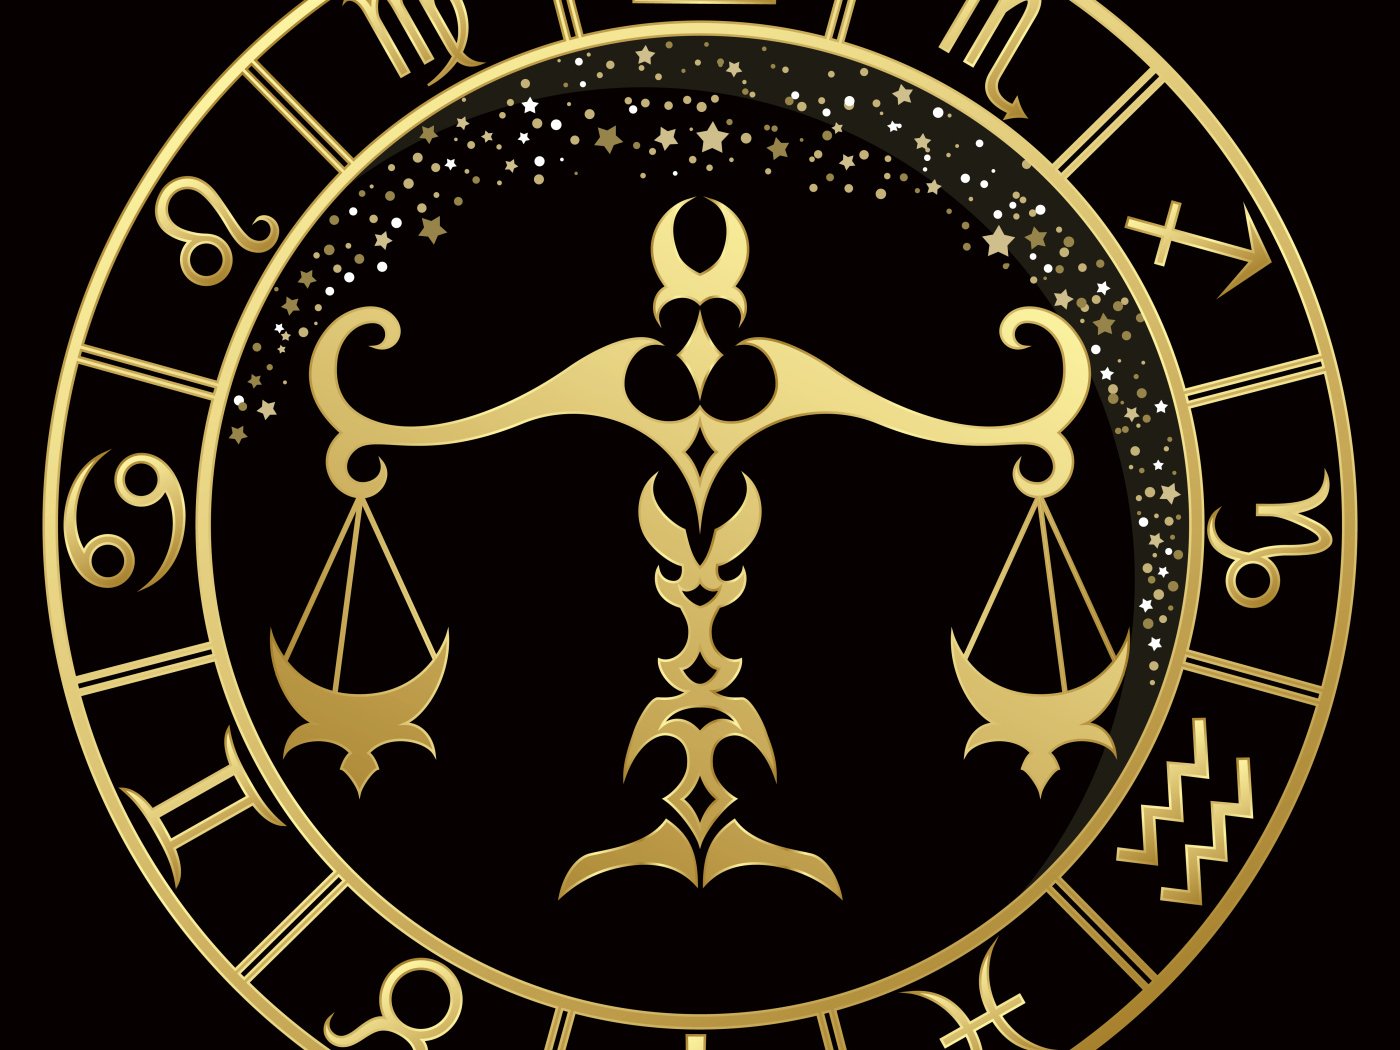 Golden zodiac sign Libra on a black background